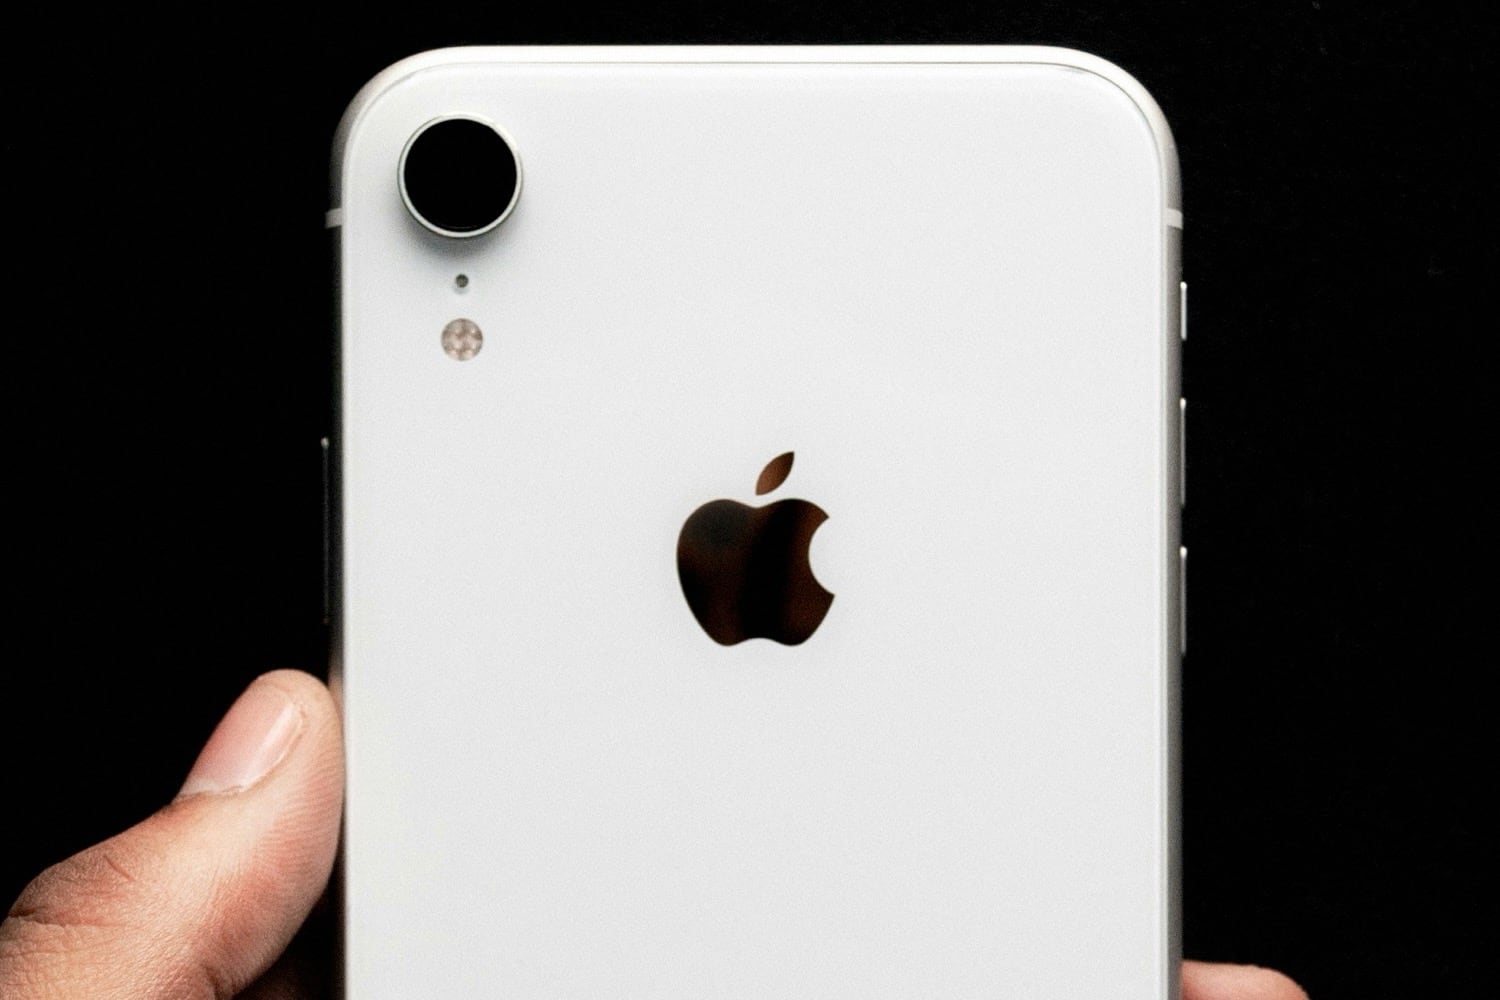 Dos iPhone logo Apple